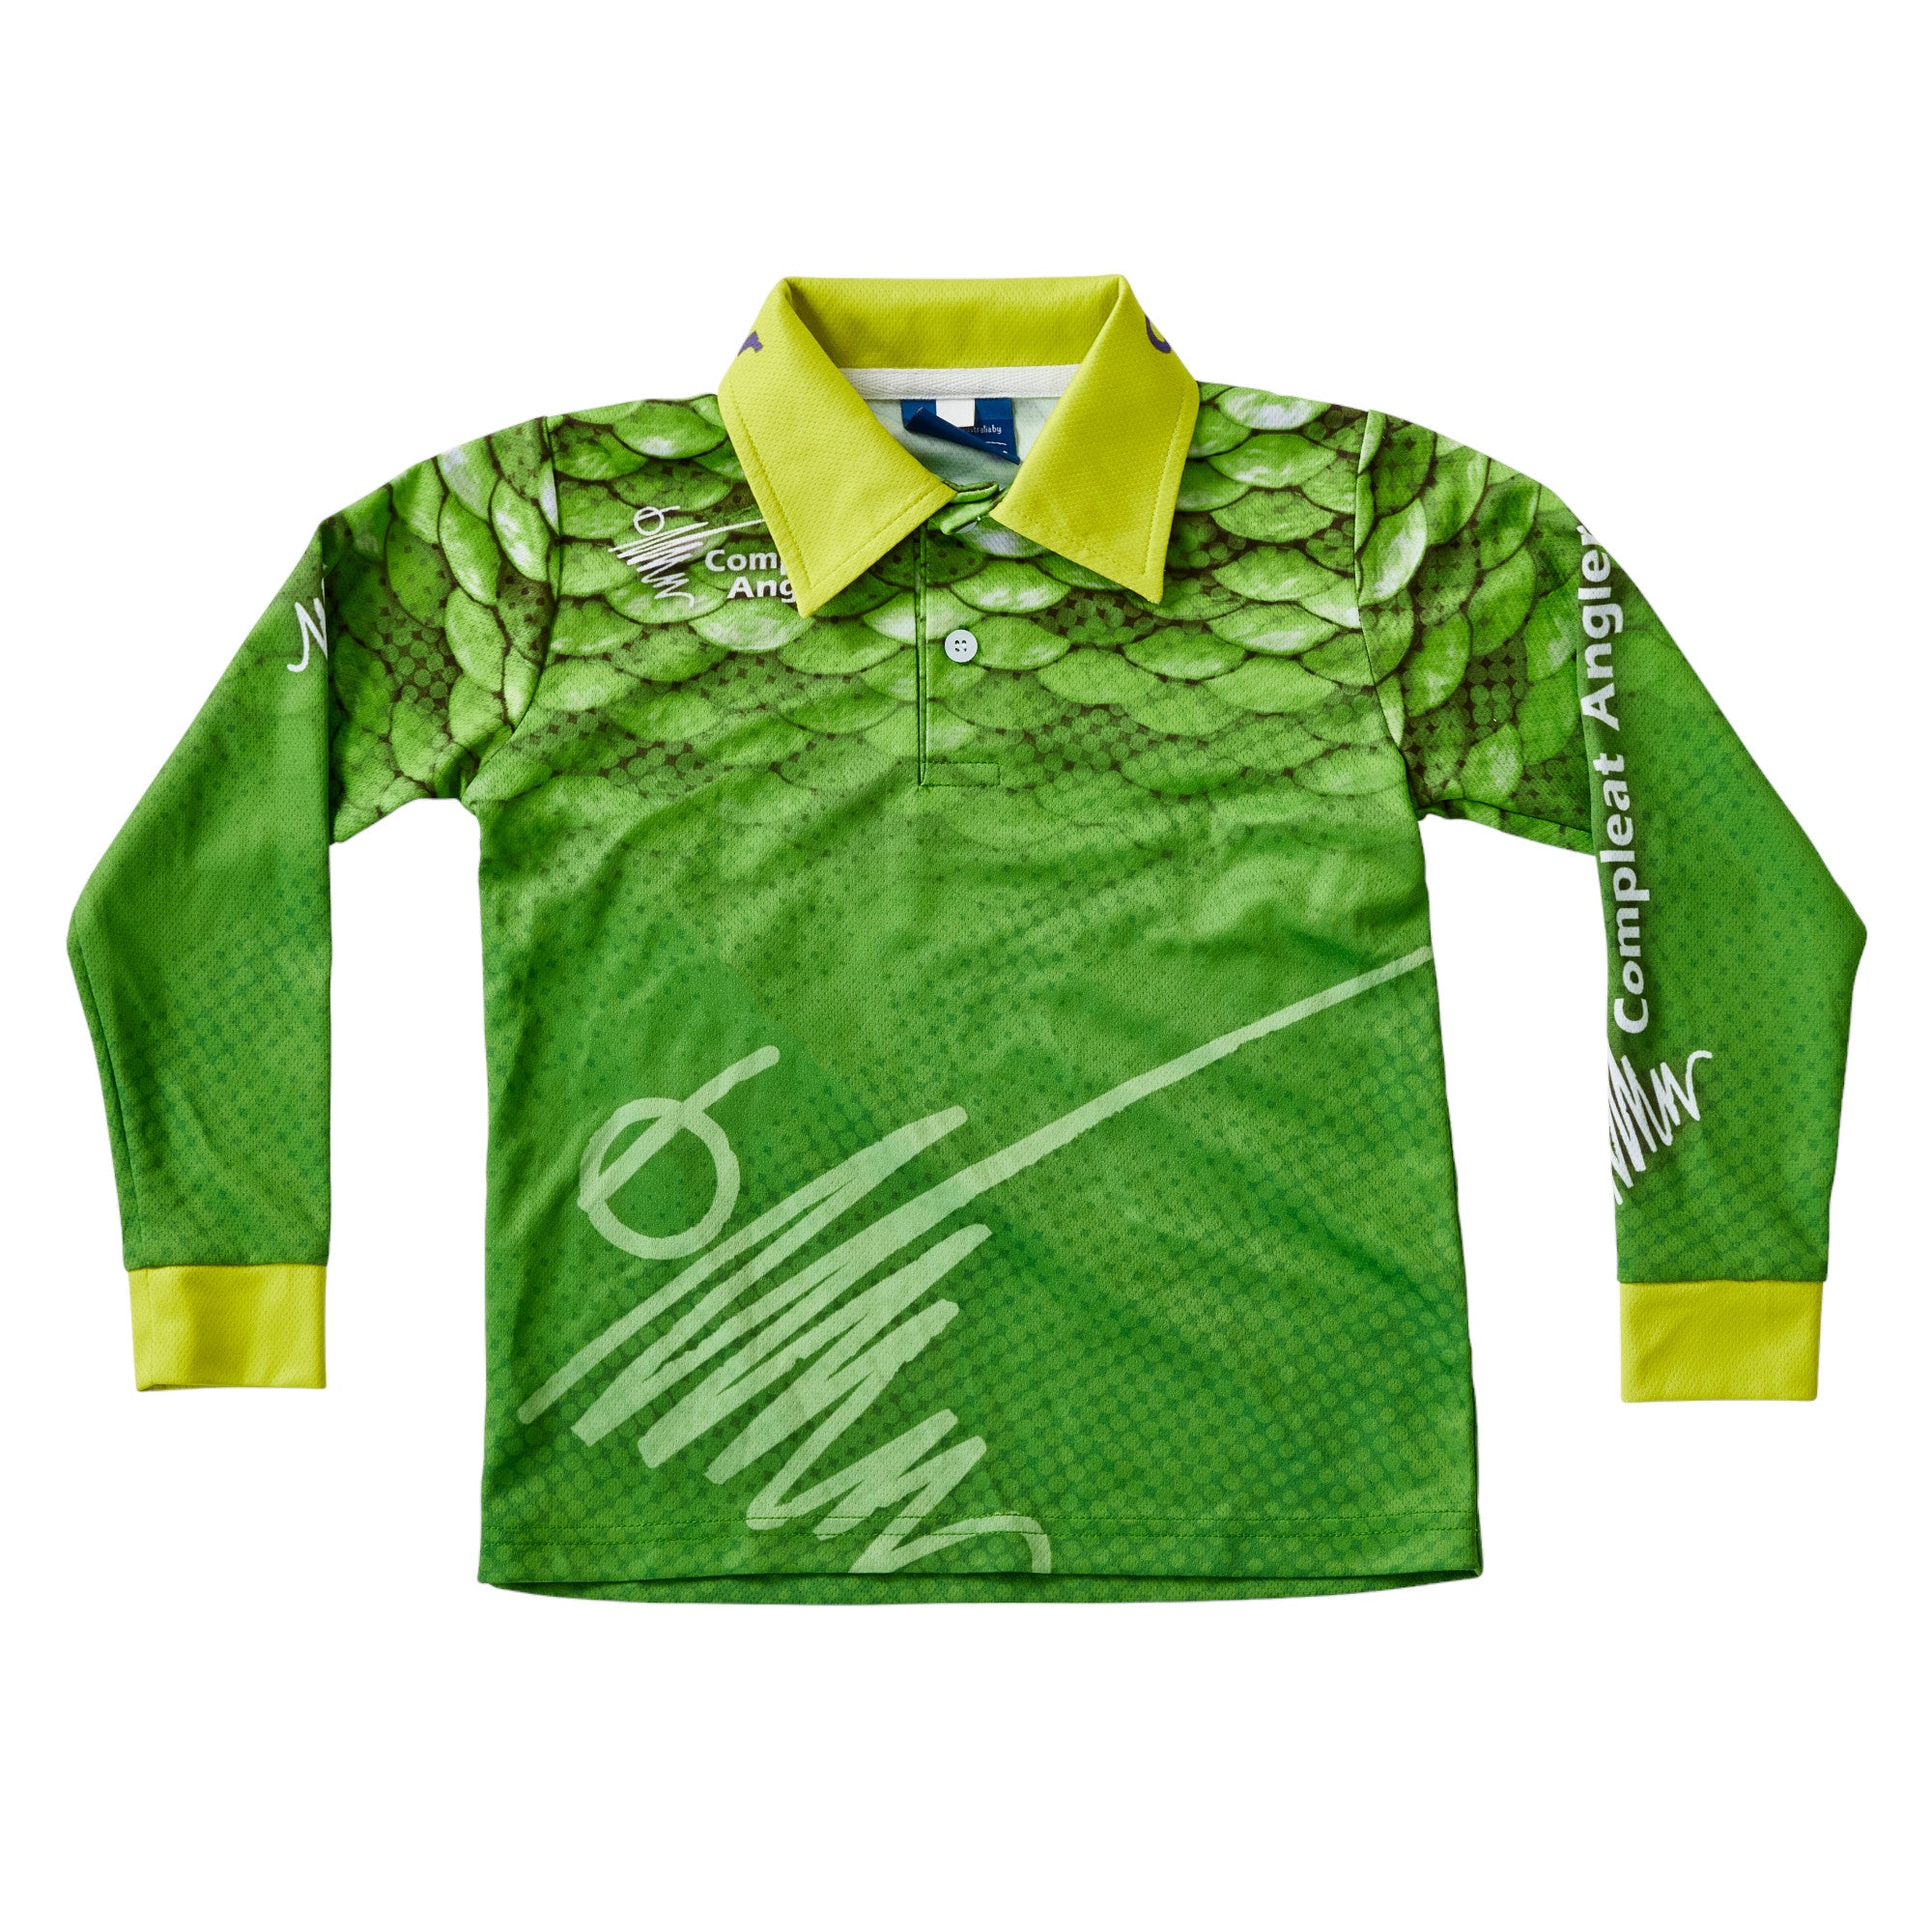 Compleat Angler Tourno Shirt Kids Green